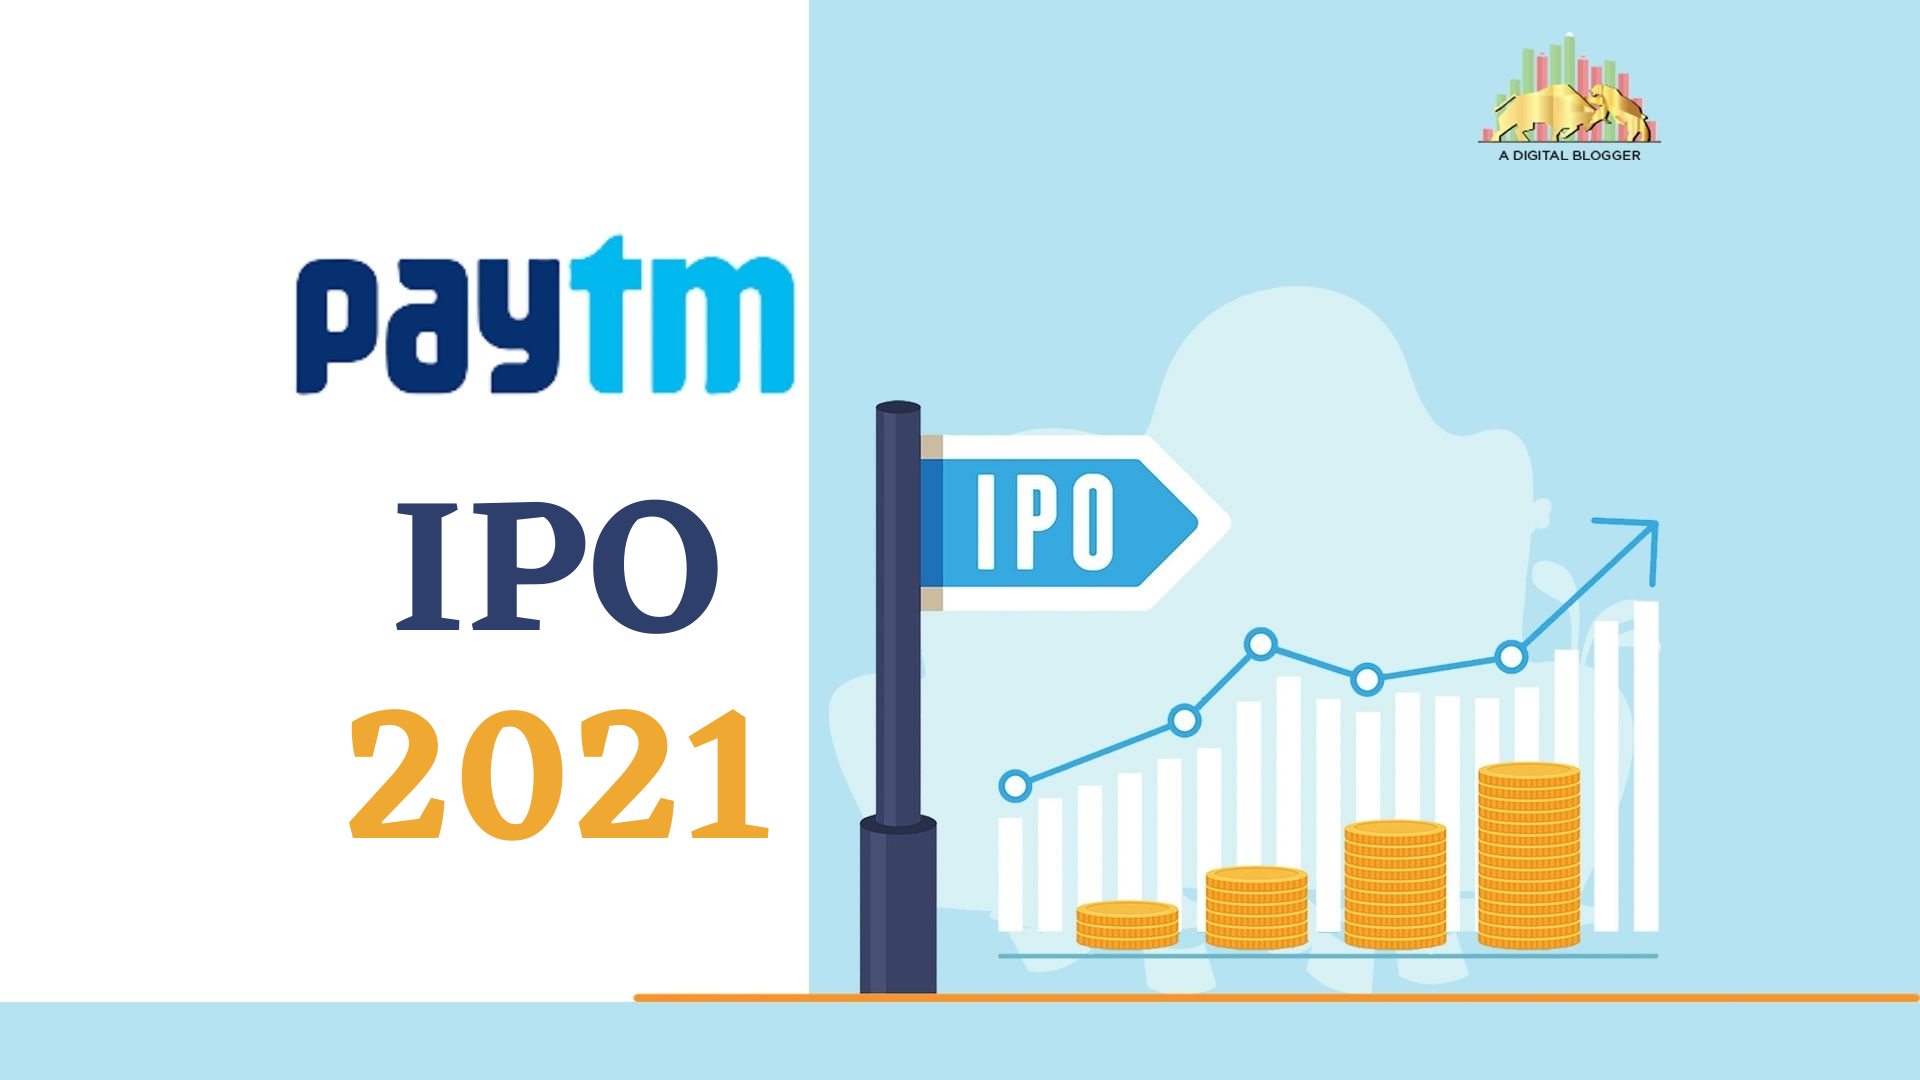 Paytm IPO 2021